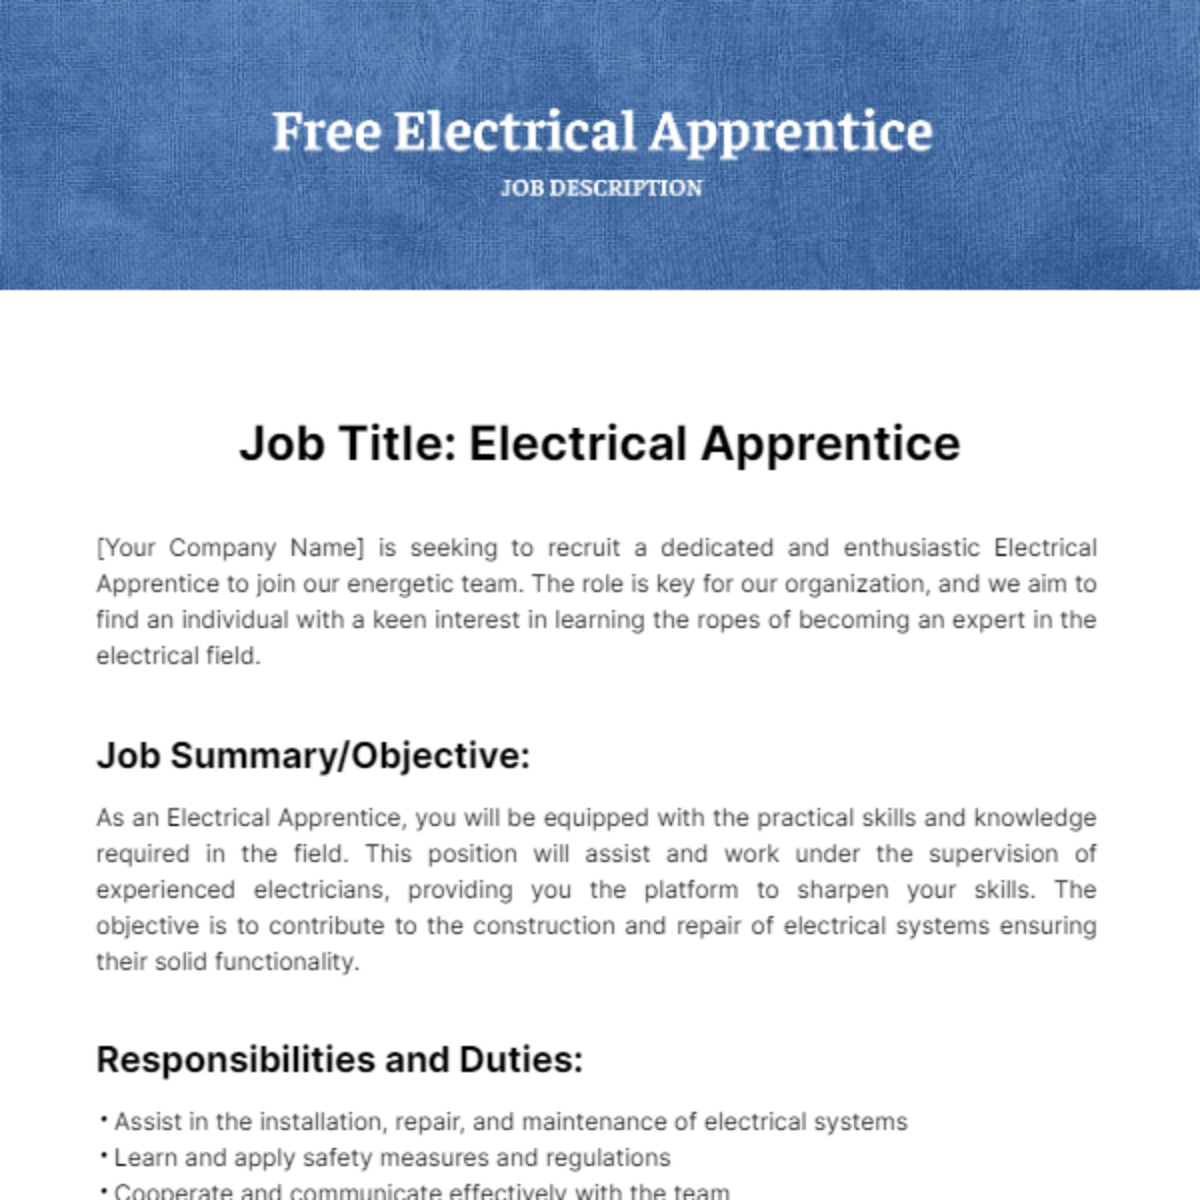 Free Electrical Apprentice Job Description Template